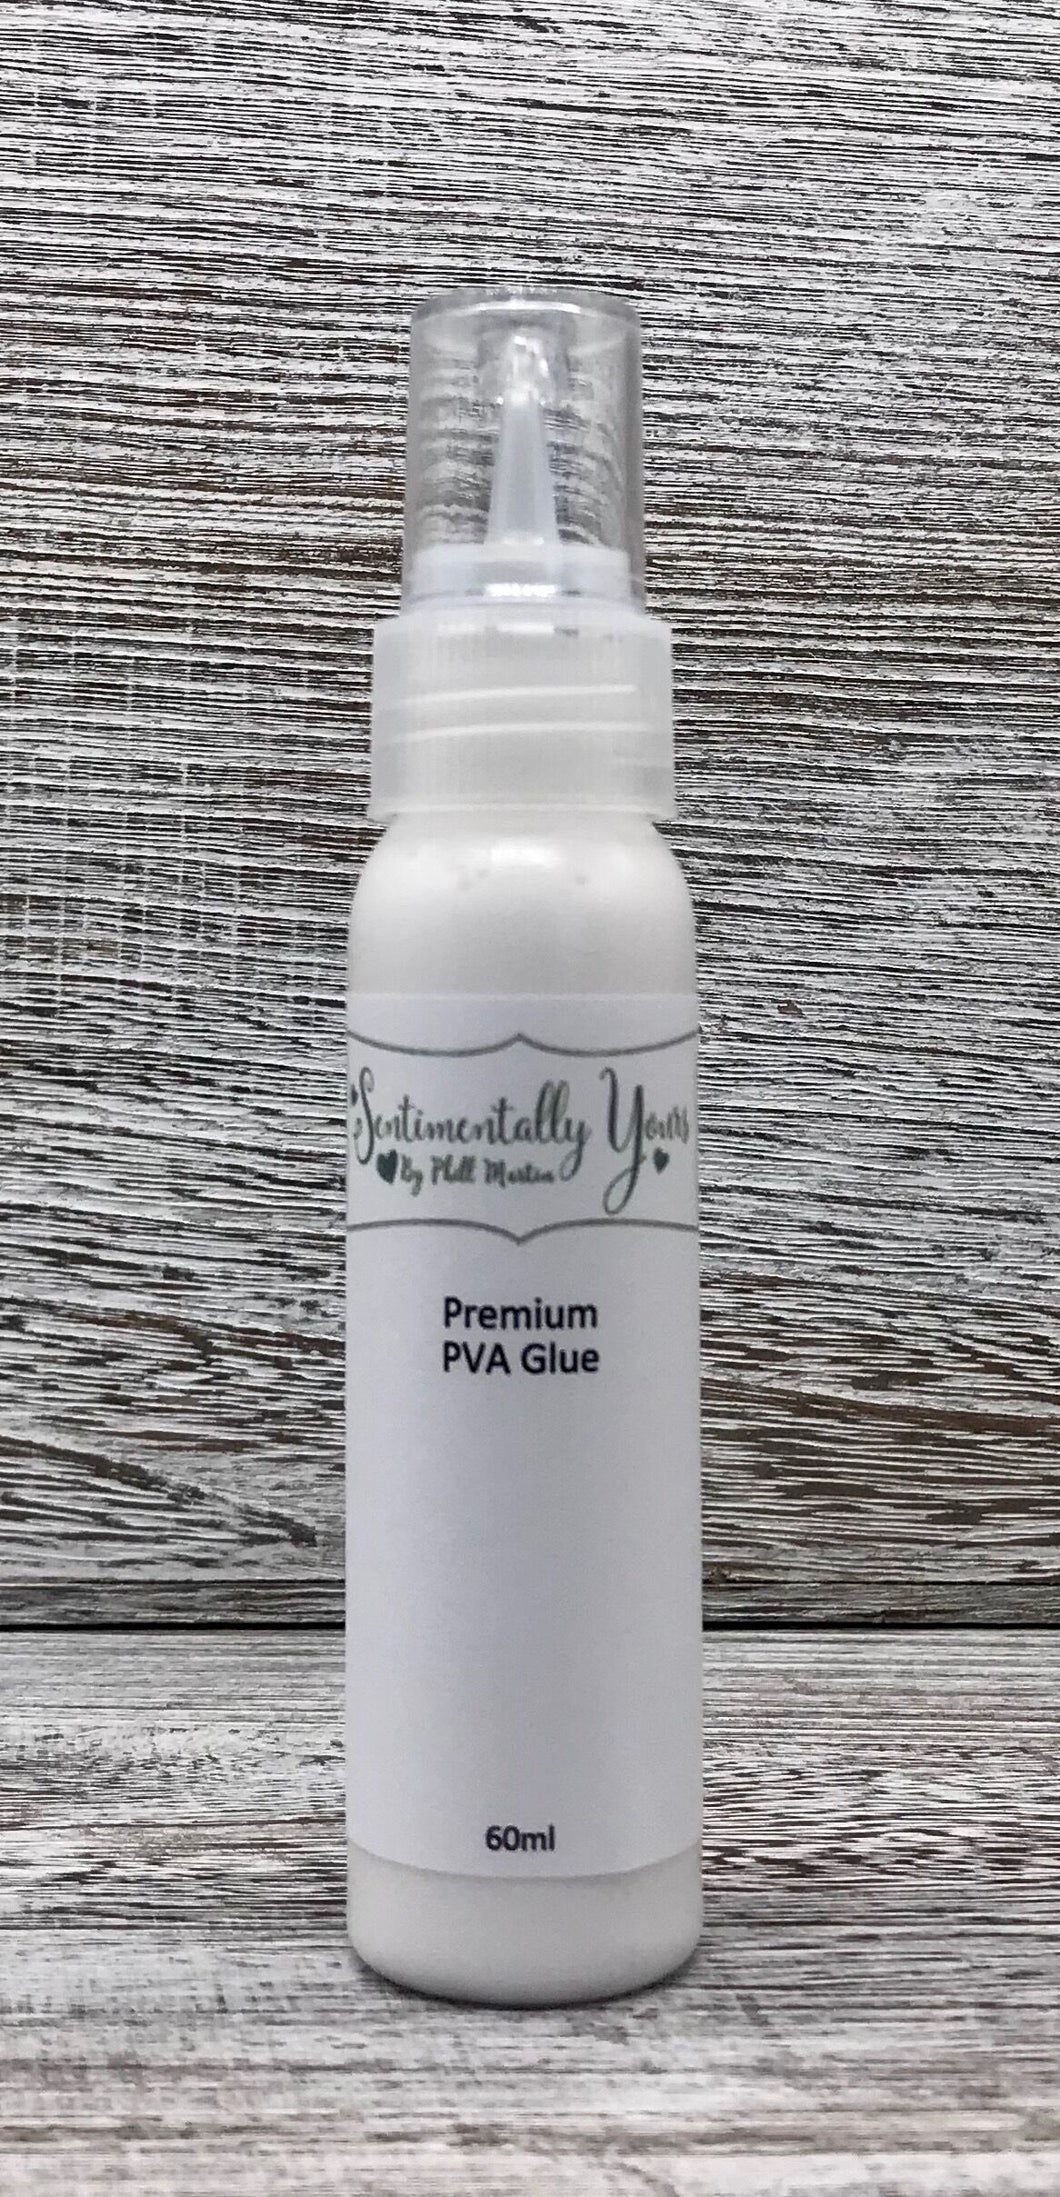 Sentimentally Yours Premium PVA Glue - 60ml